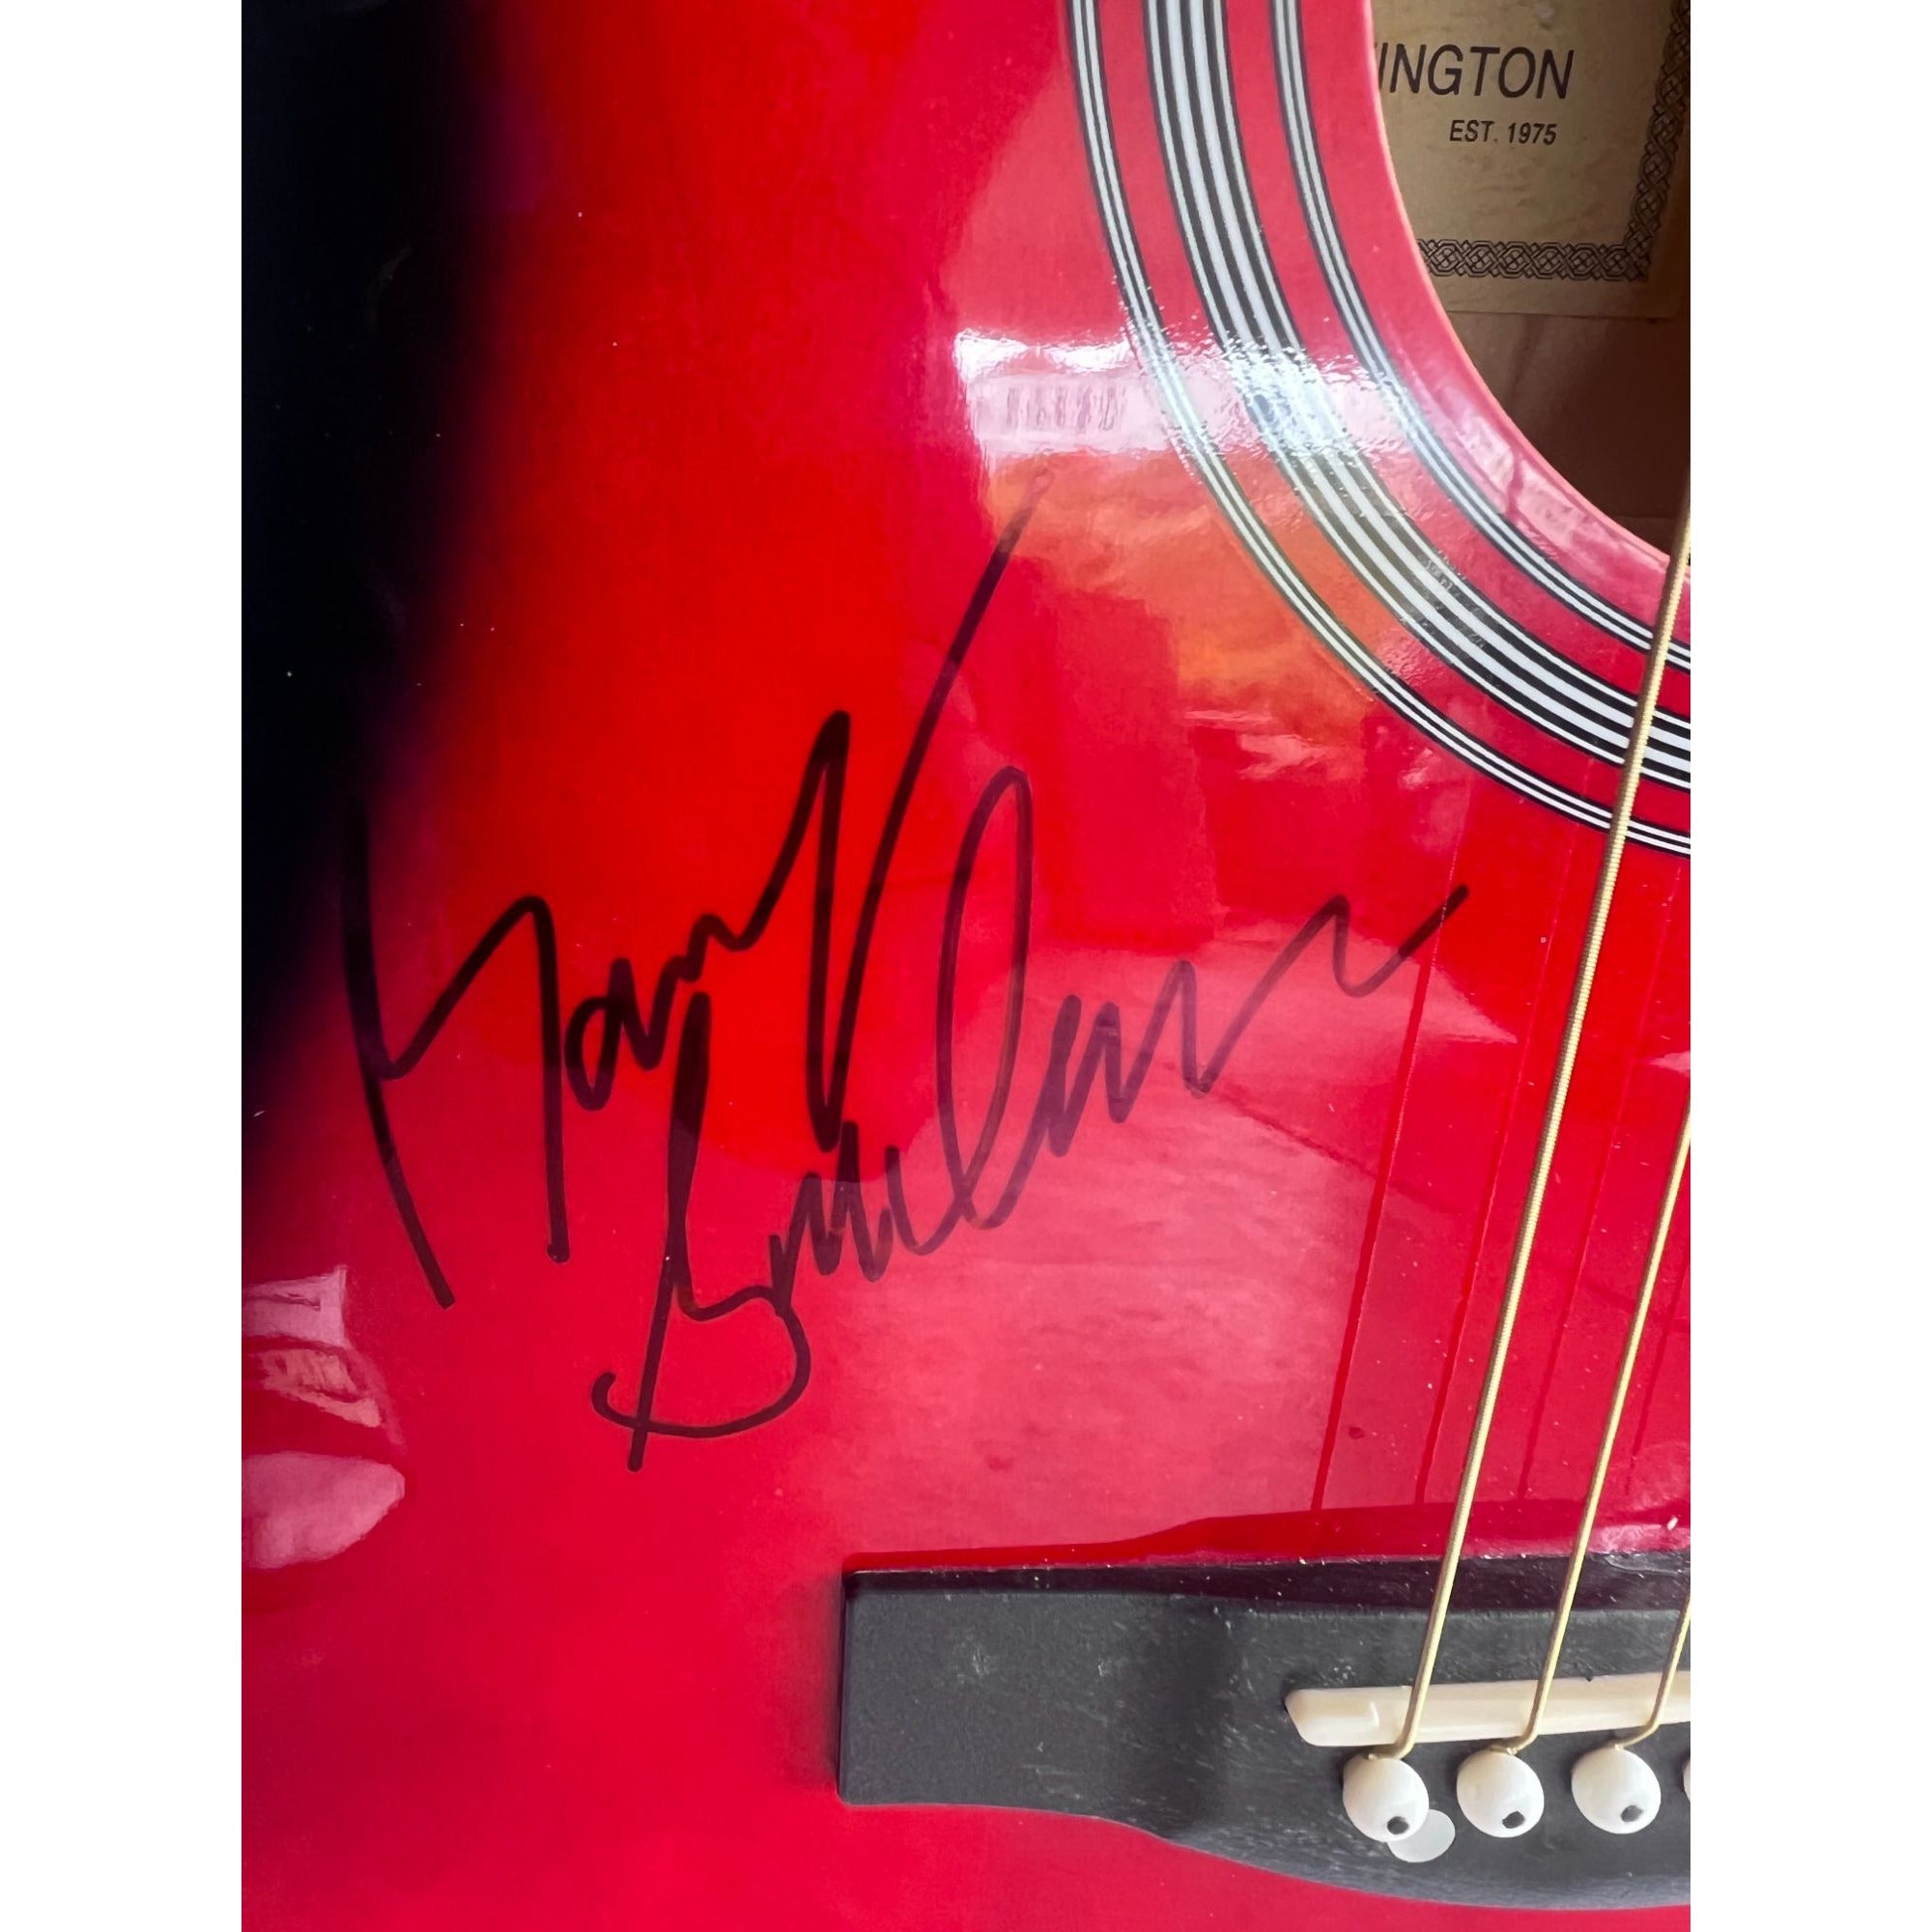 Boston Brad Delp Tom Scholz Sib Hashian Barry Goudreau Huntington full size acoustic guitar signed